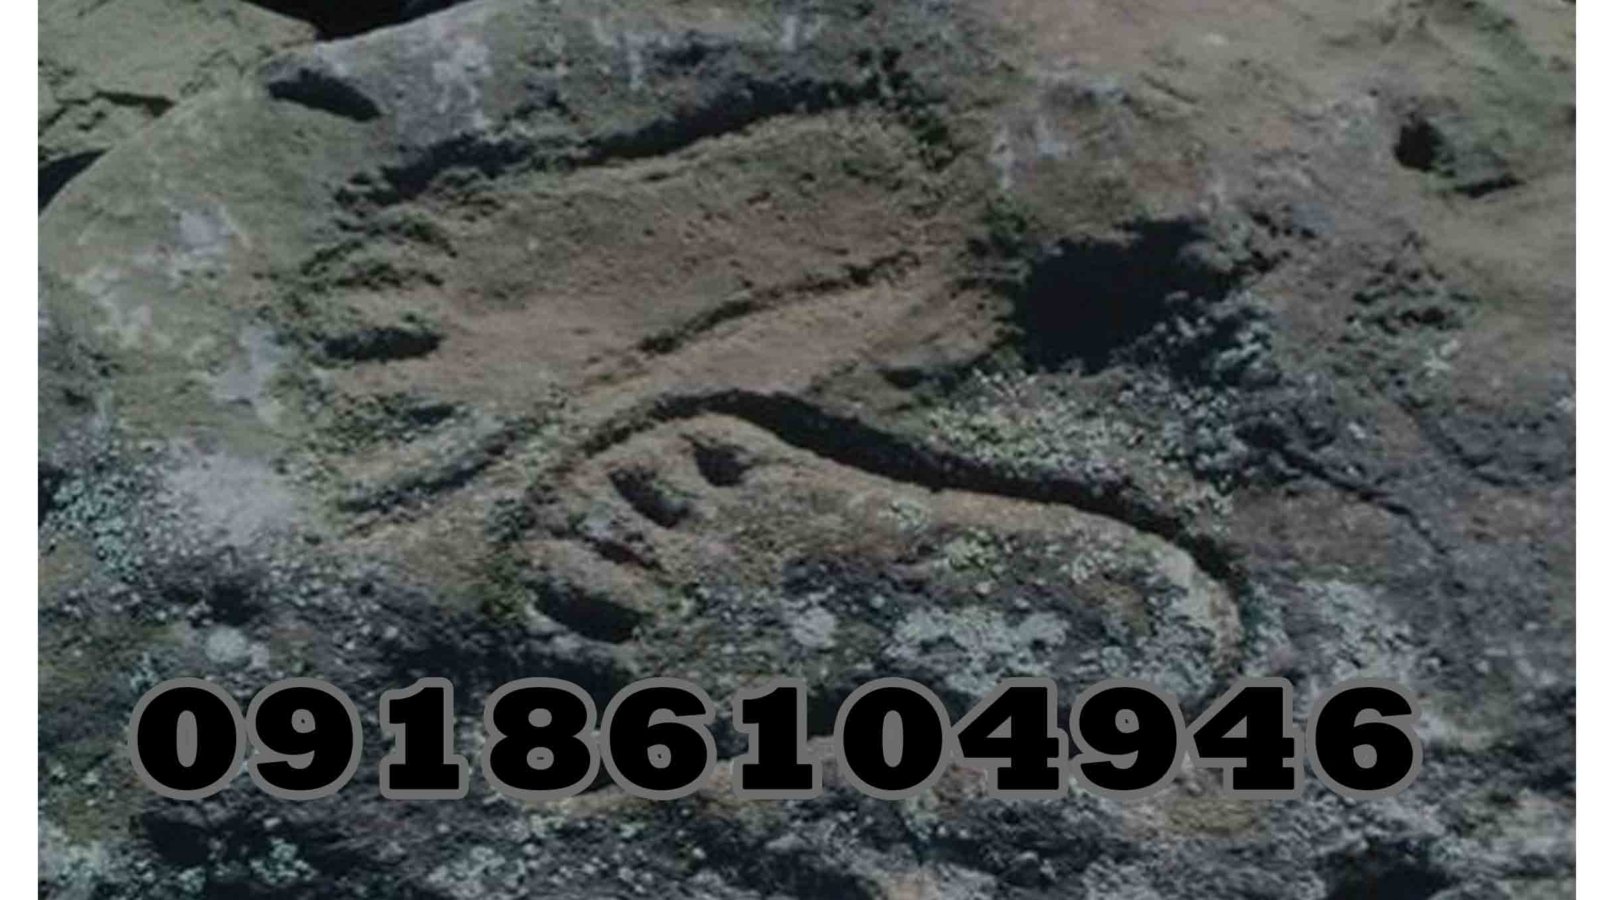 Footprints in burial and treasure hunting